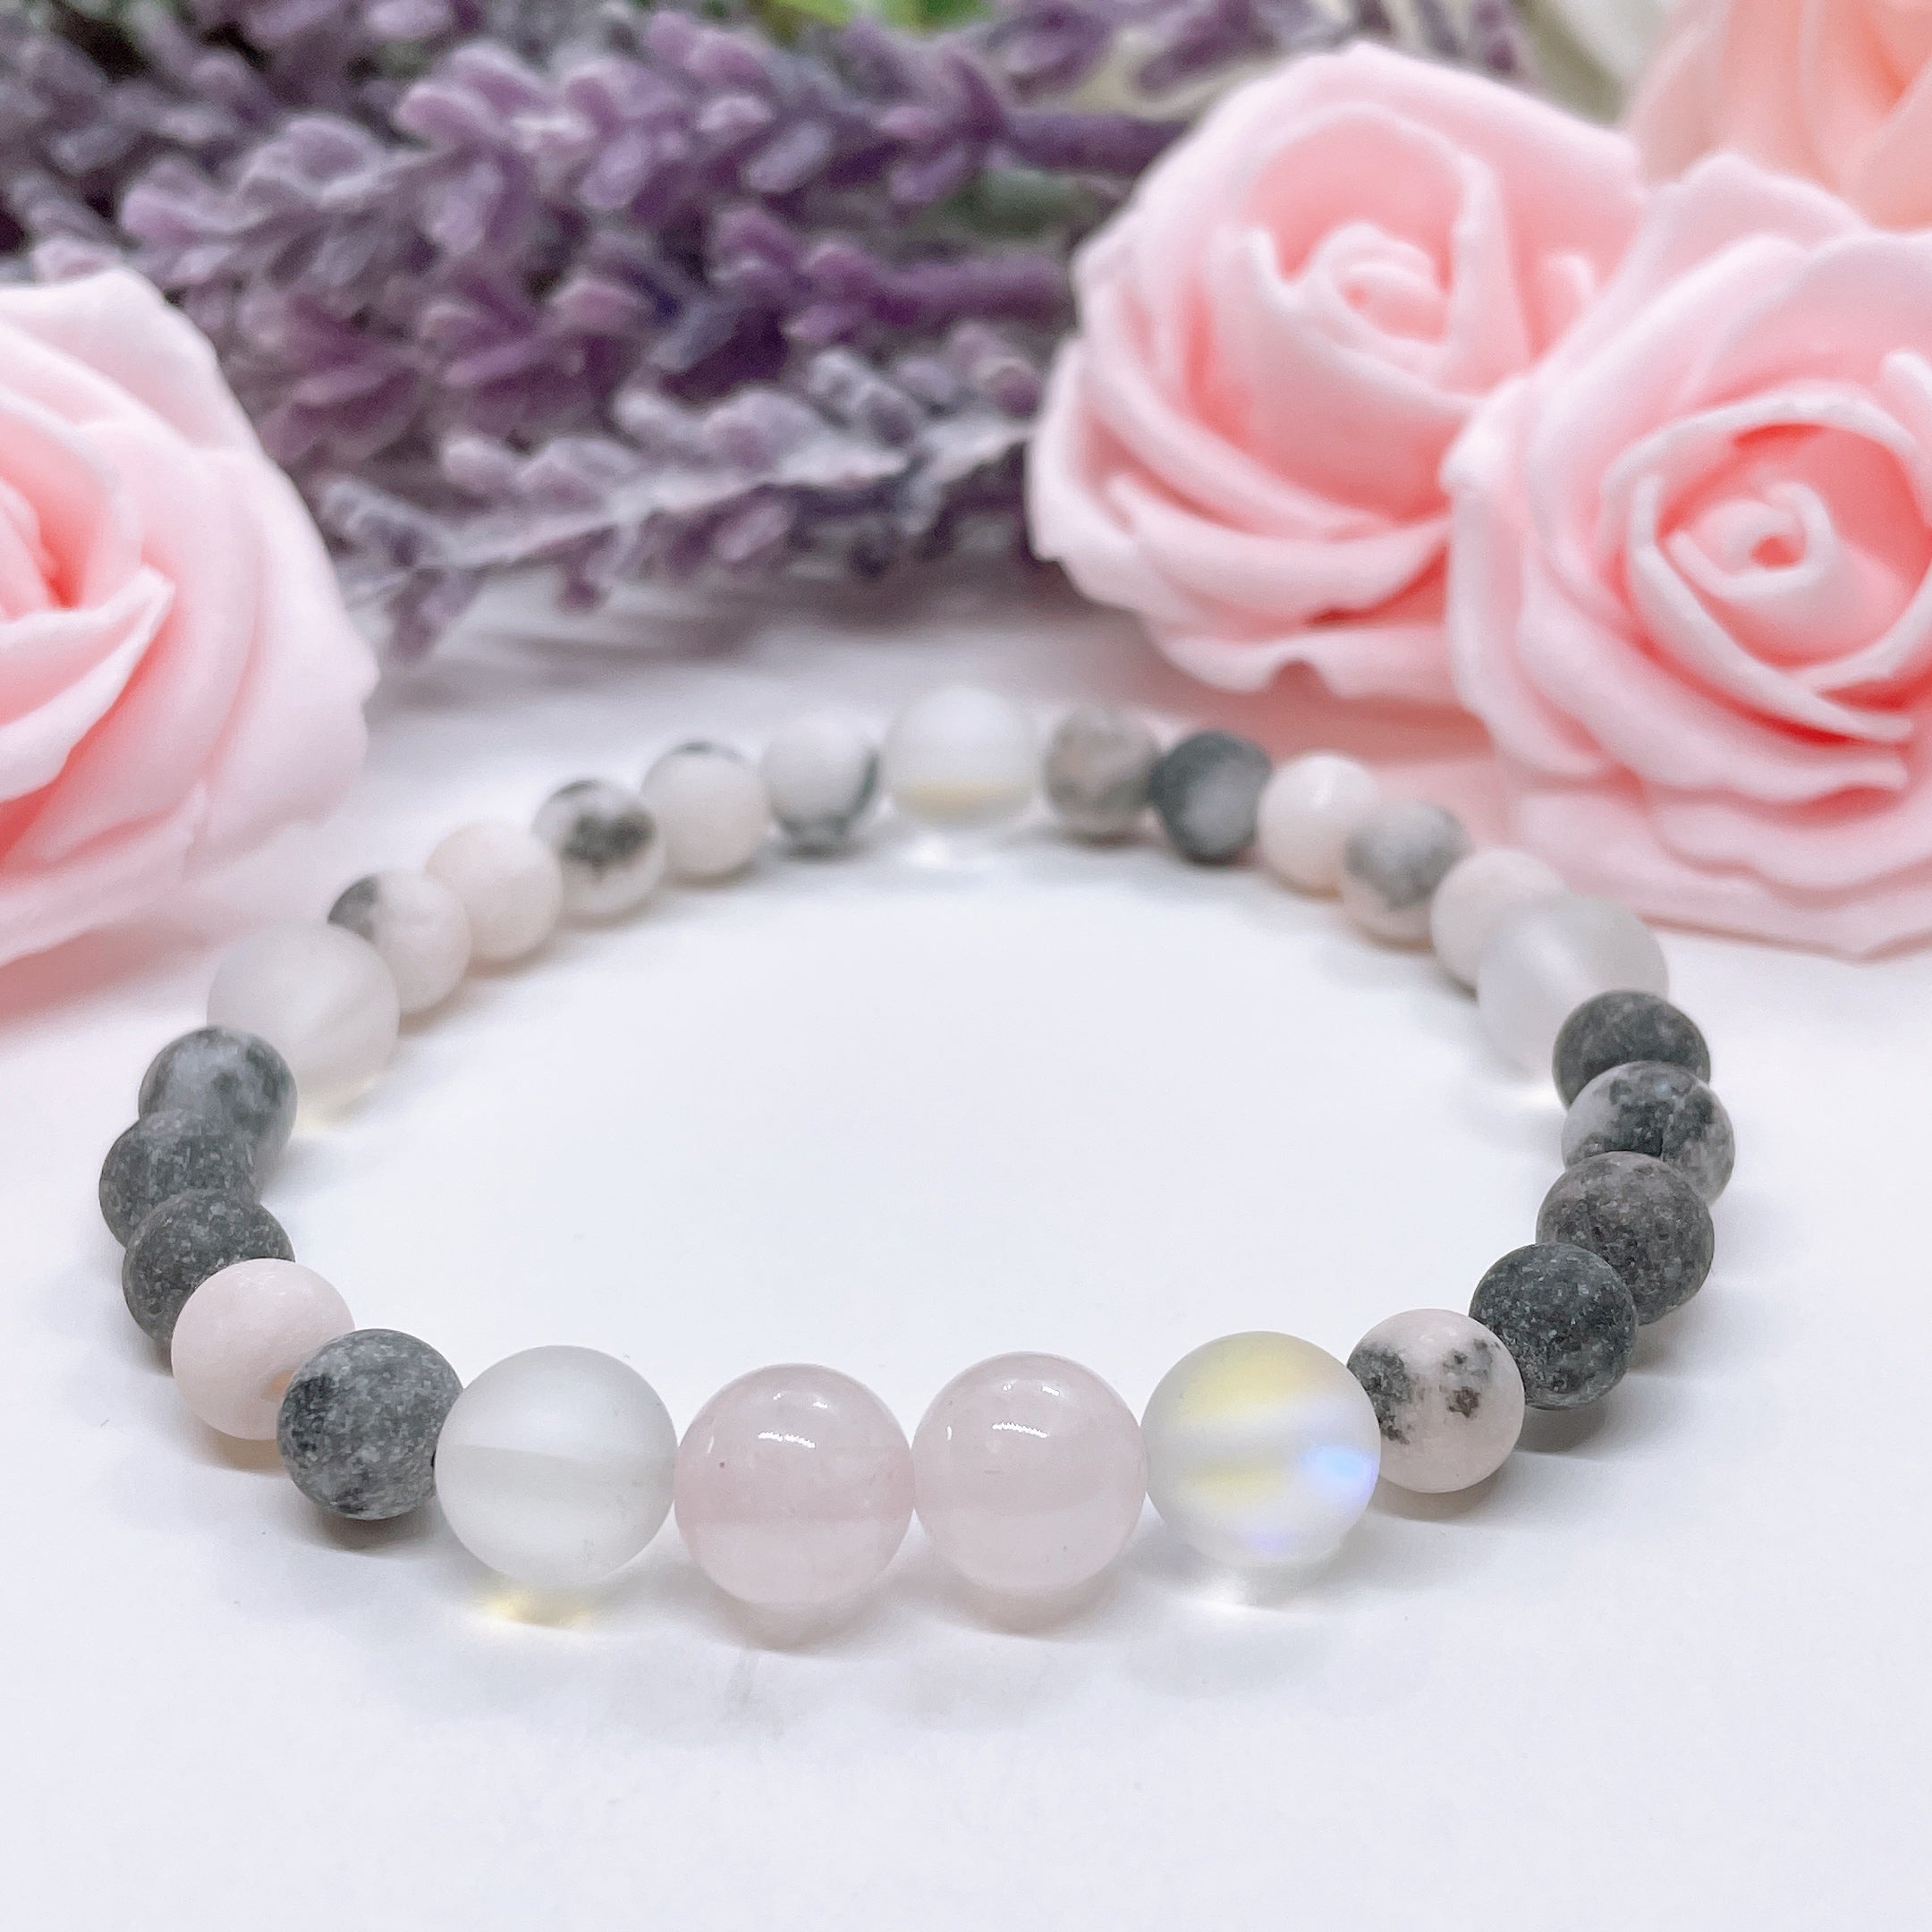 The Rose Quartz Companion Gemstone stretch bracelet made with 2 pink rose quartz gemstones, translucent aura beads, and pink jasper gemstones sit on a white table.